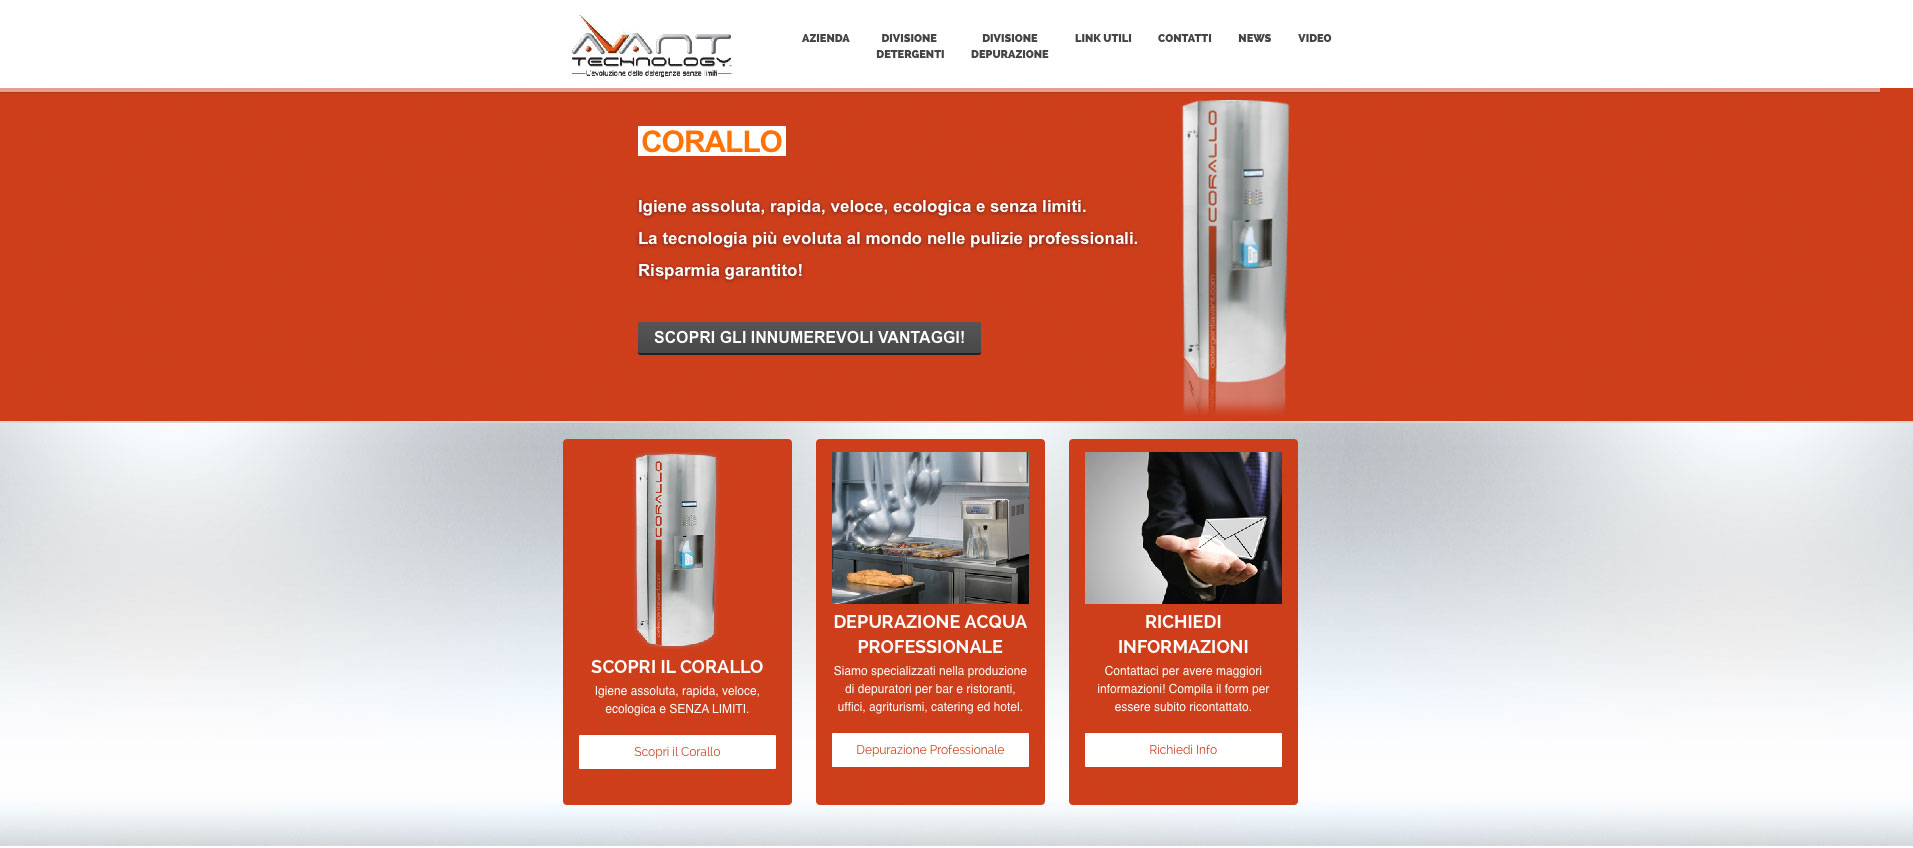 Online il nuovo sito web Detergenza Professionale Avant Technology